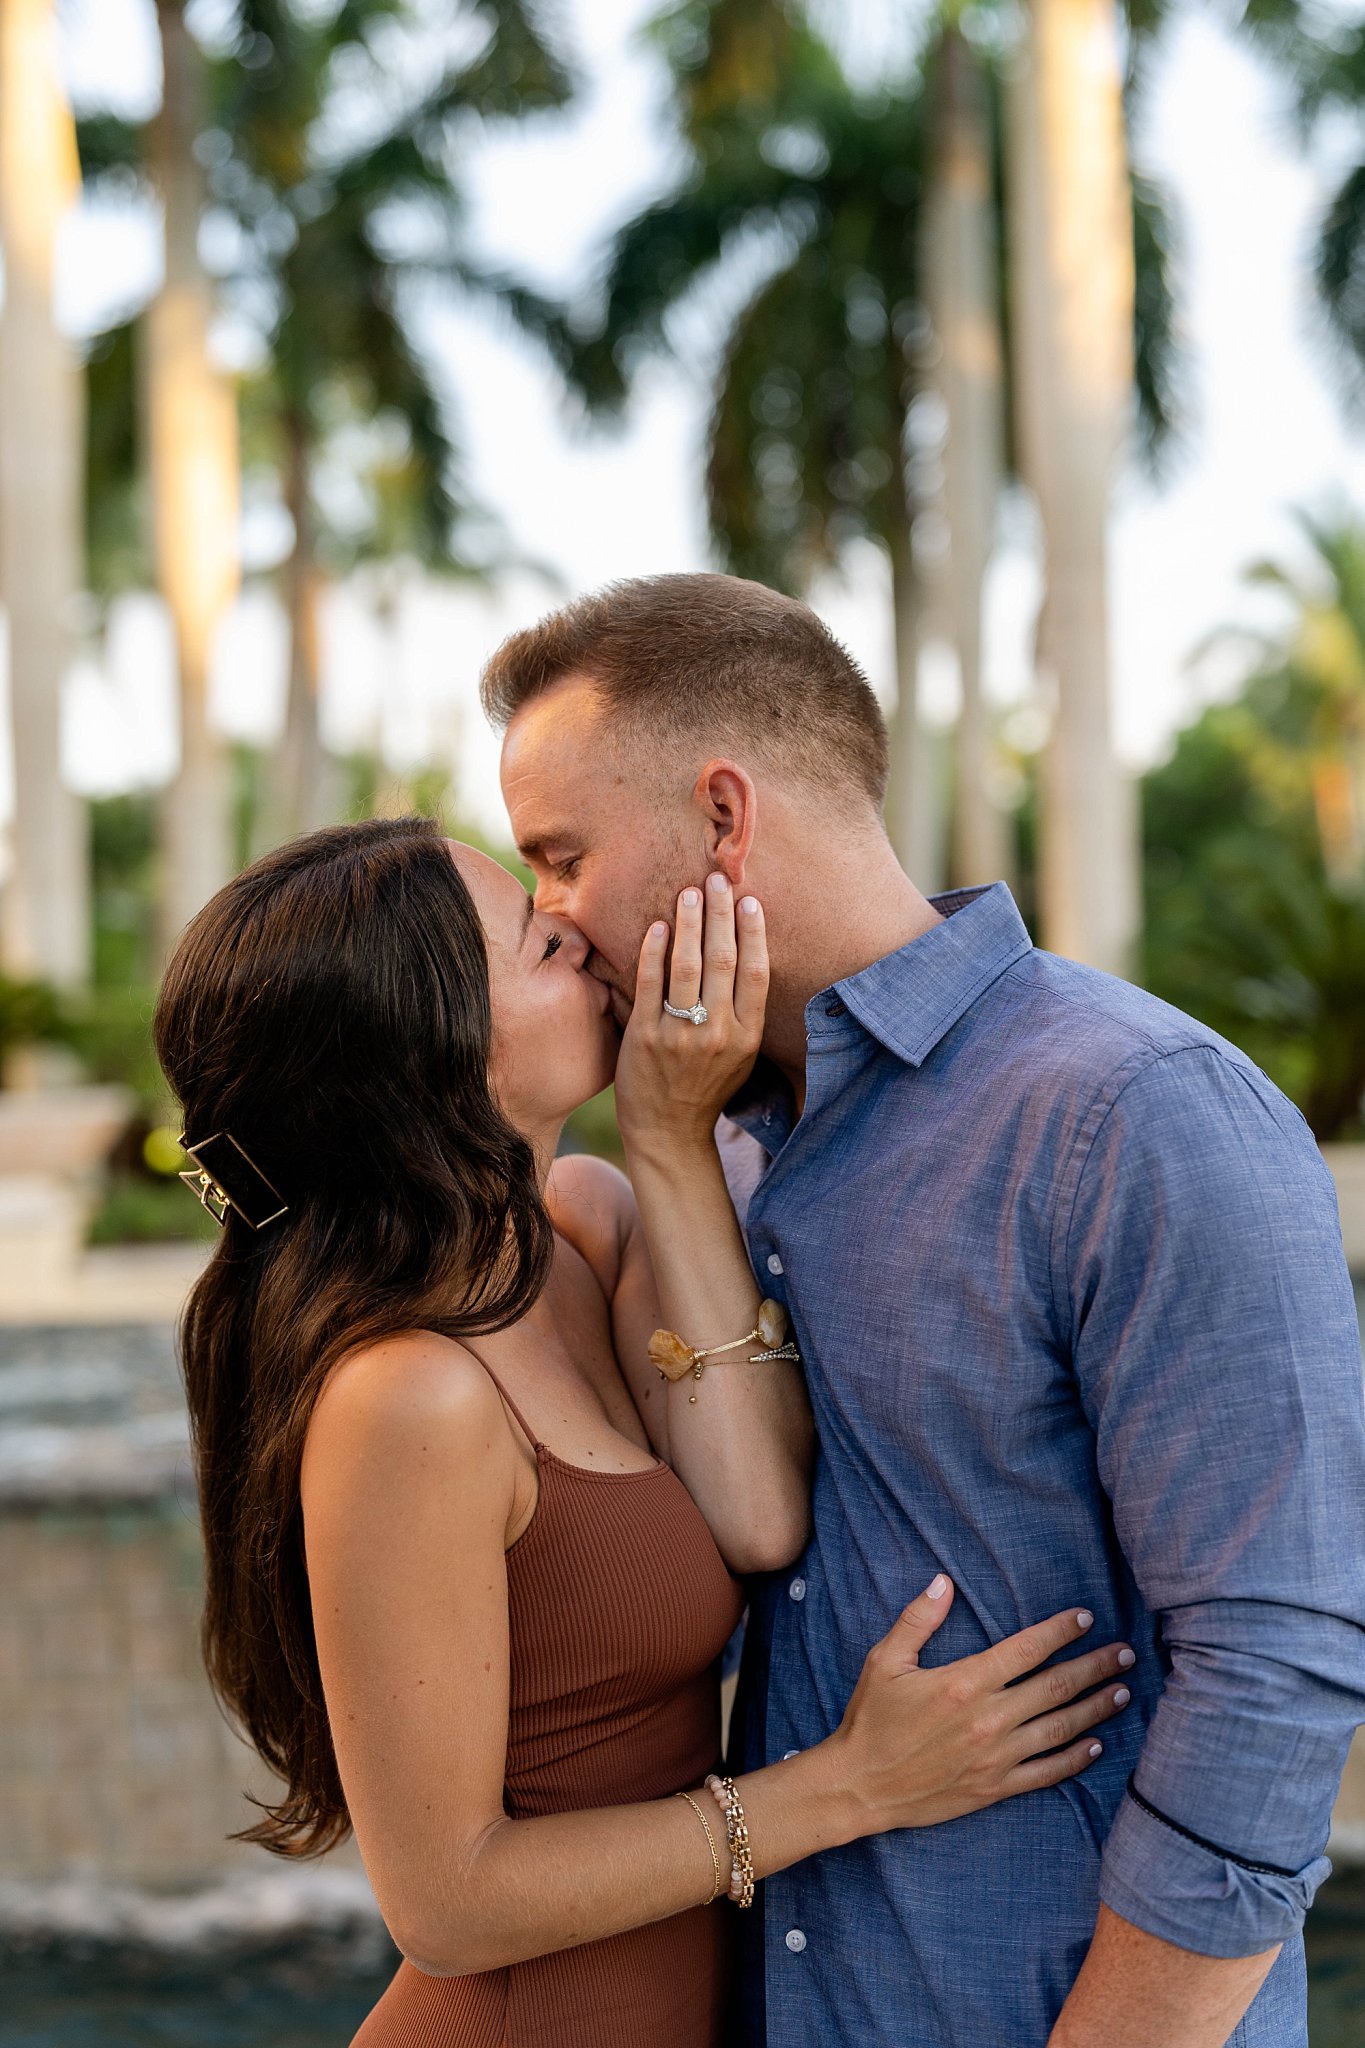 Bonita Springs Florida engagement portrait couple embraces and kisses while bride shows off engagement ring